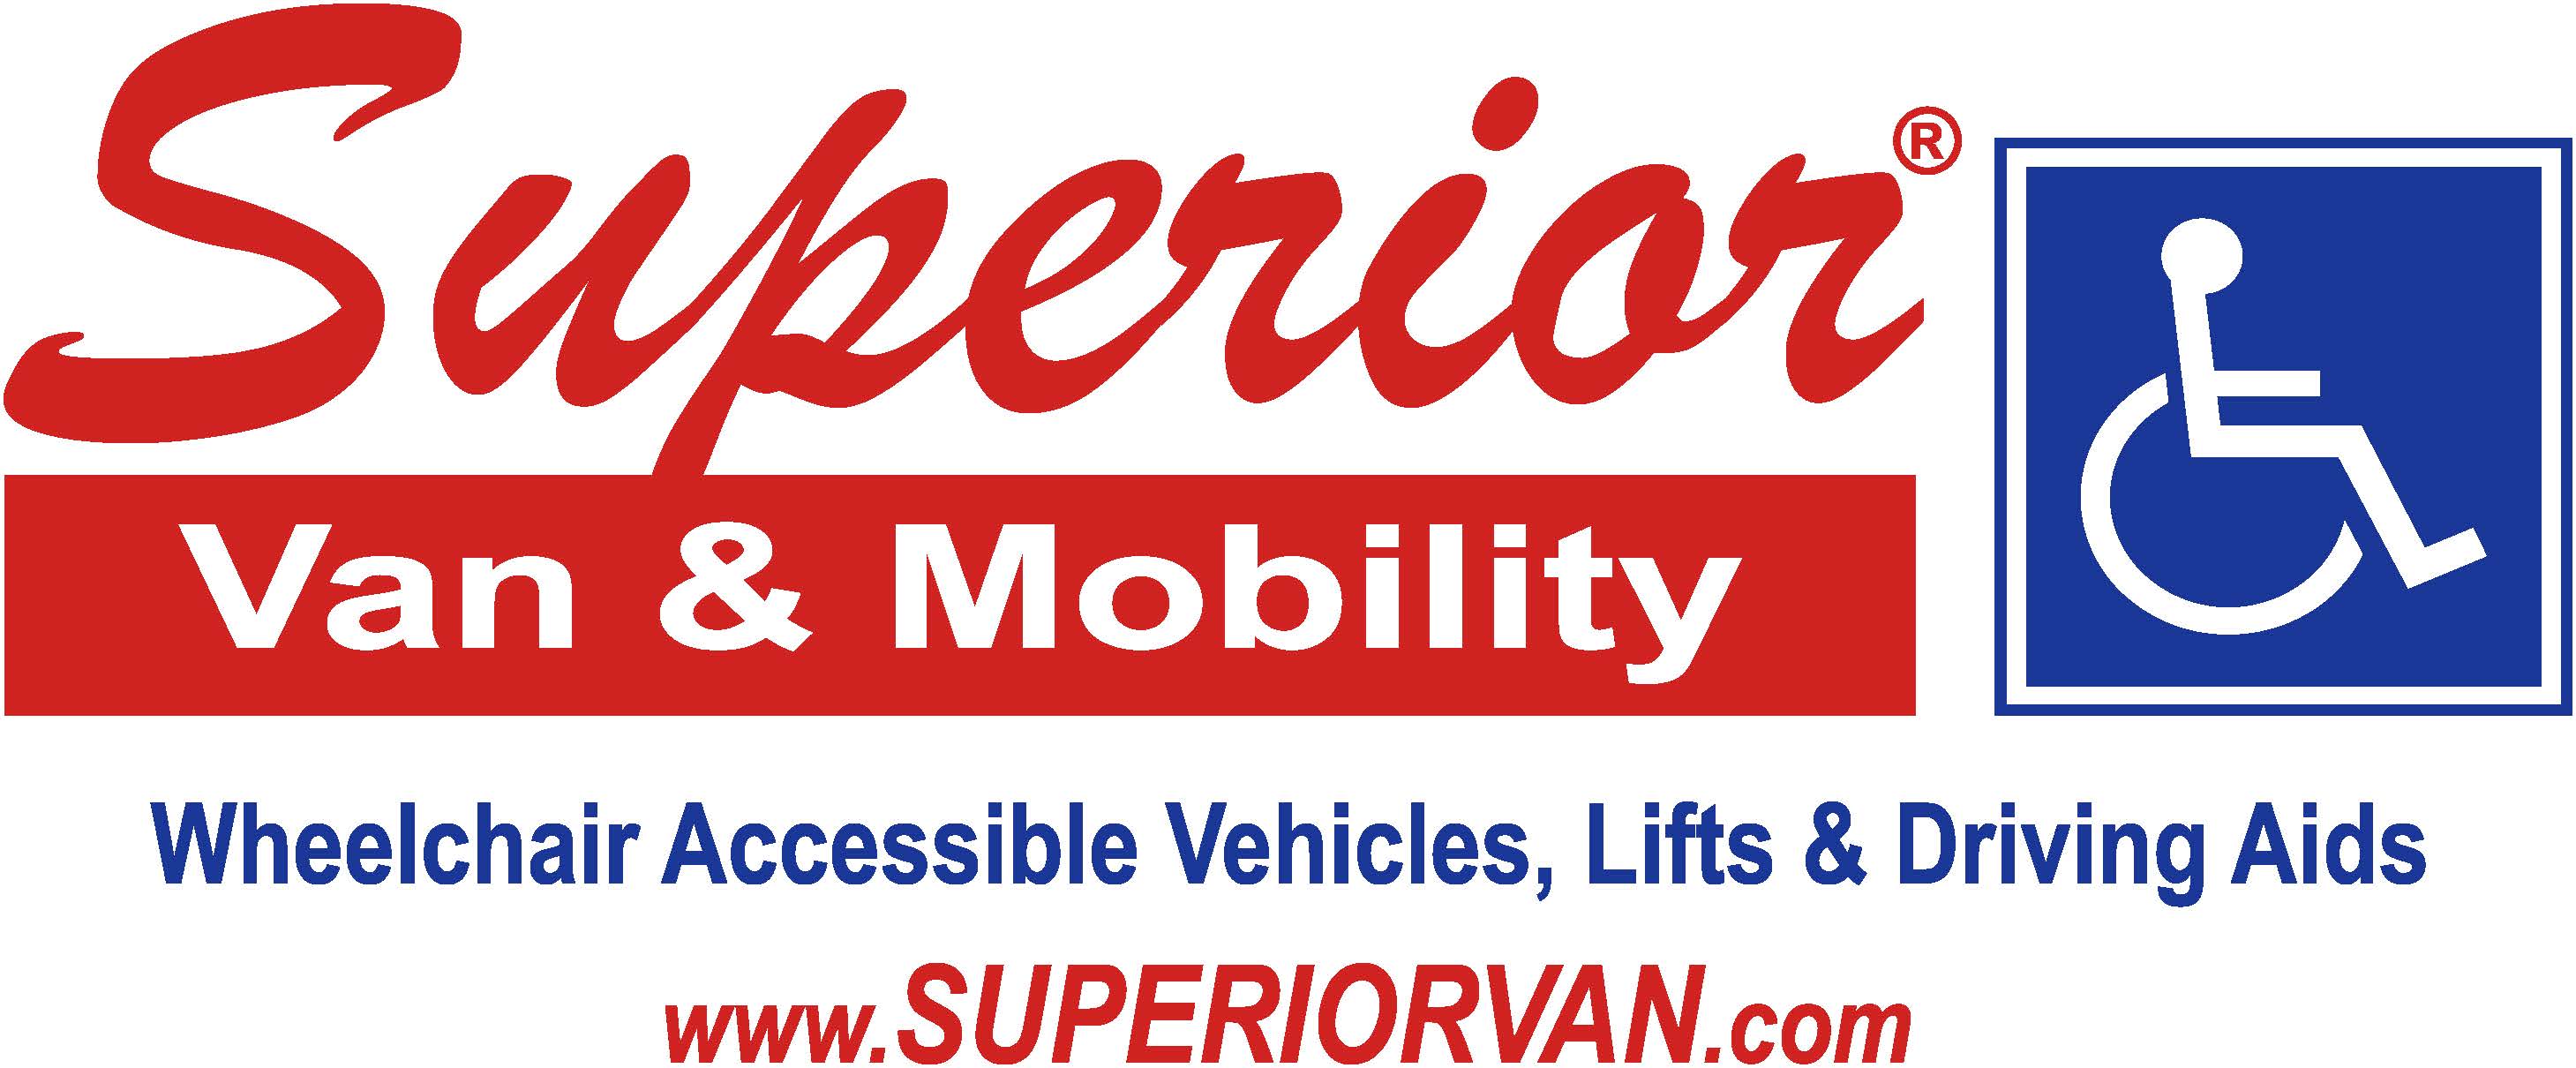 Superior Van & Mobility Opens New Location in Ypsilanti, Michigan